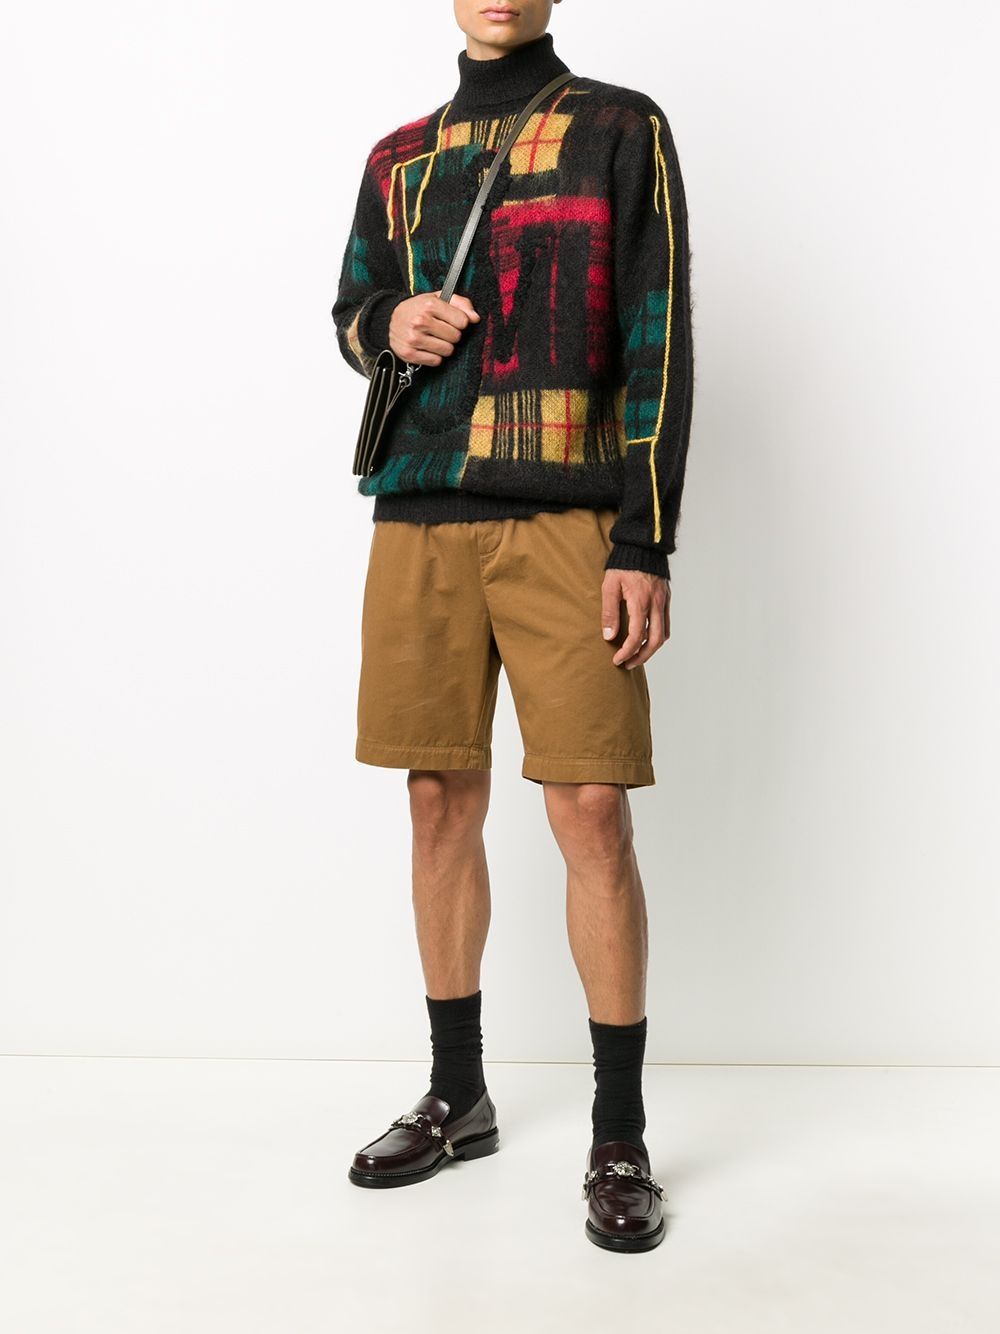 фото Jw anderson свитер с высоким воротником